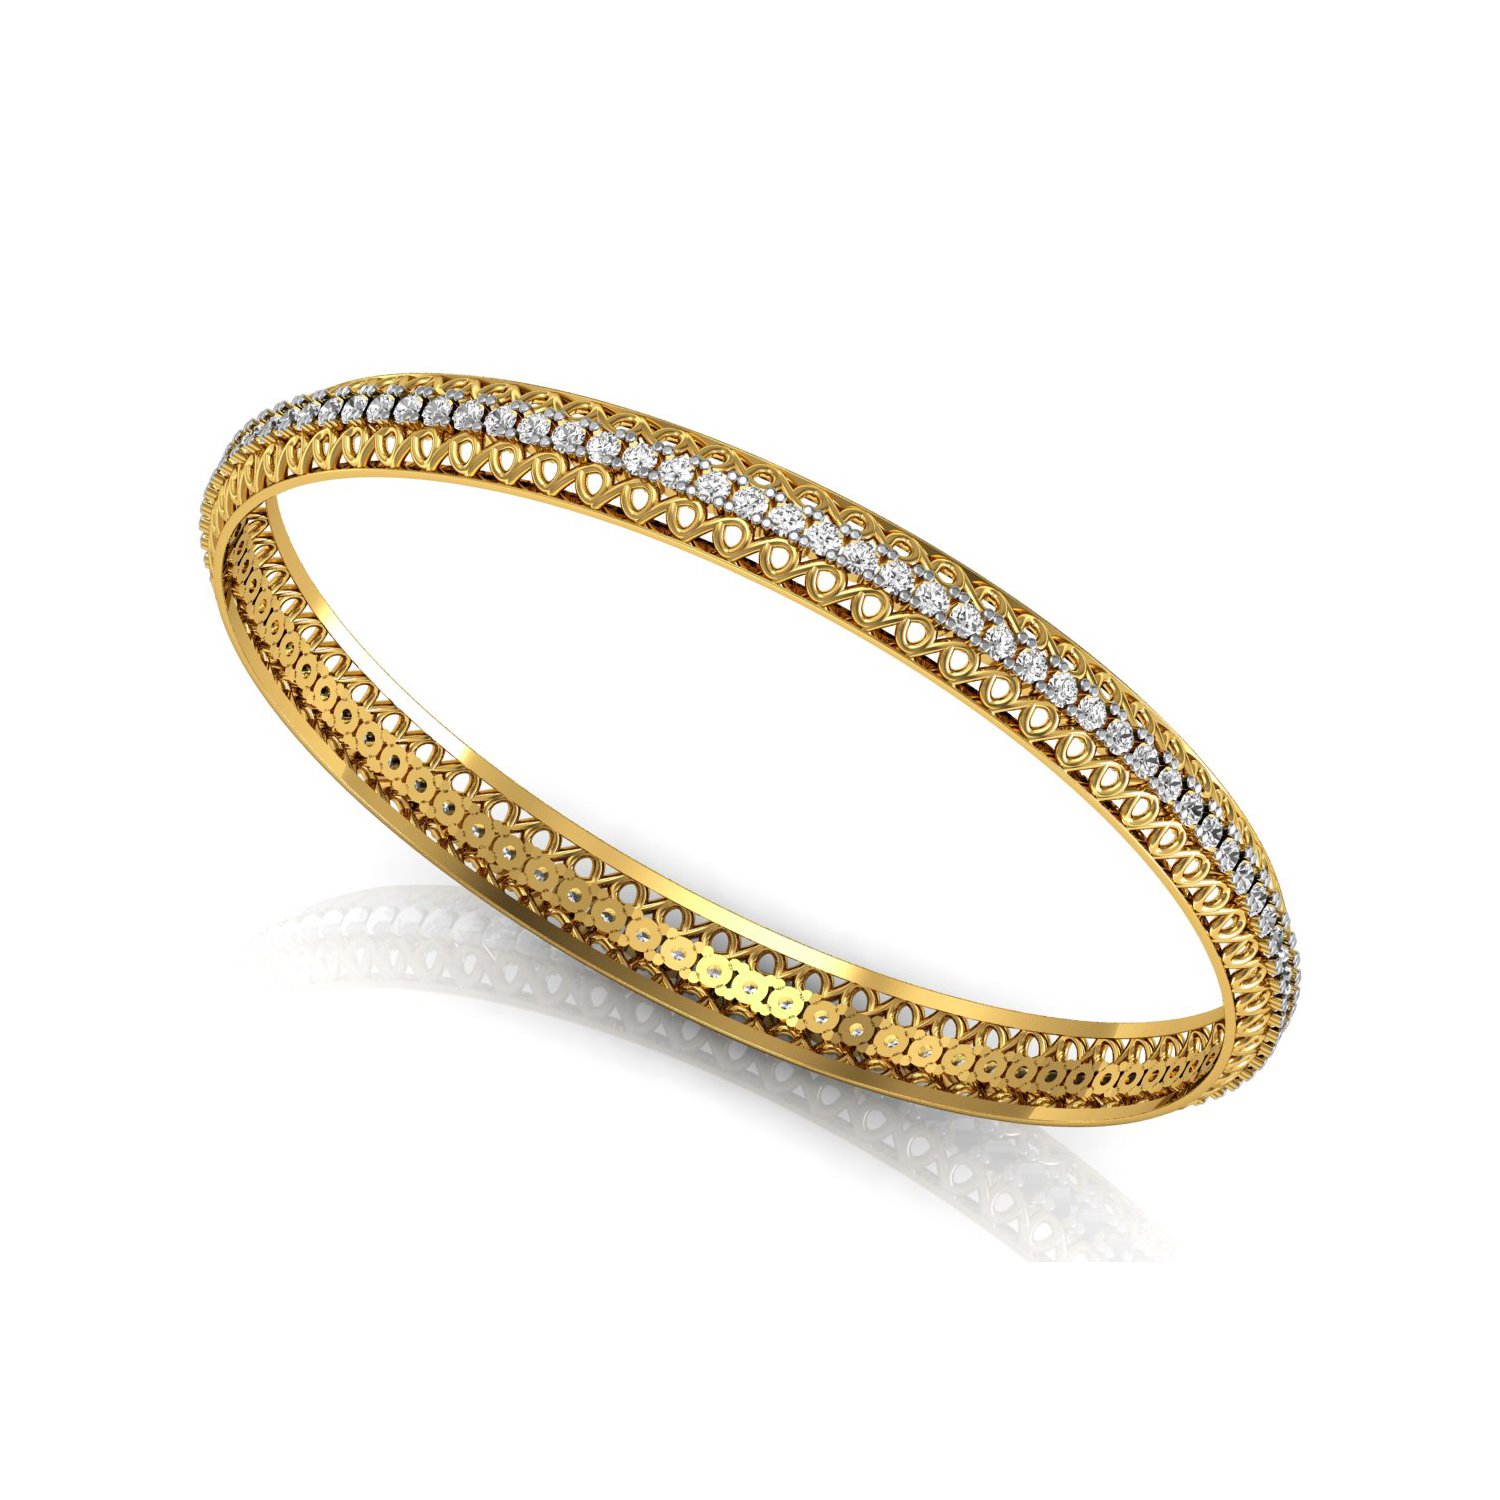 Natural diamond solid gold wedding bangle